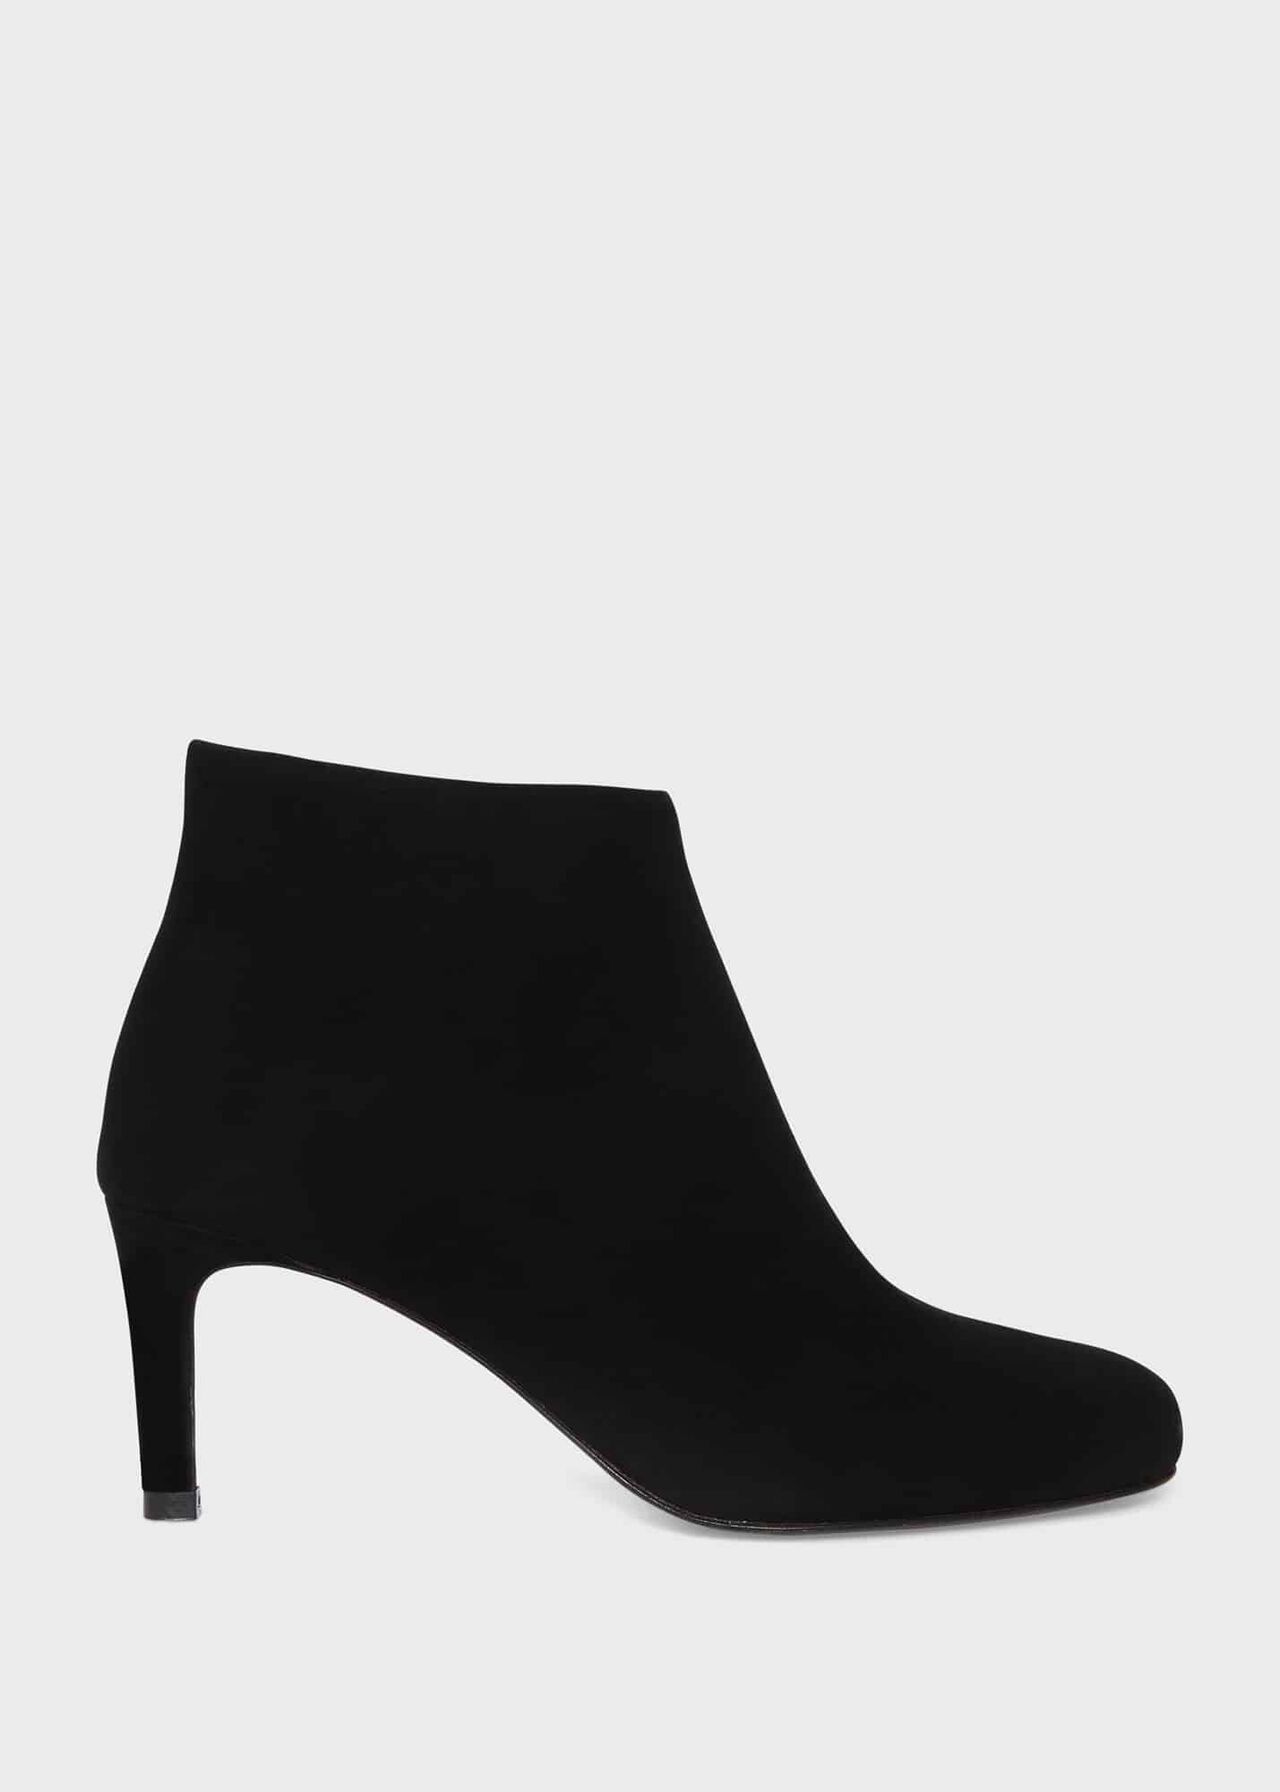 Lizzie Ankle Boots, Black, hi-res